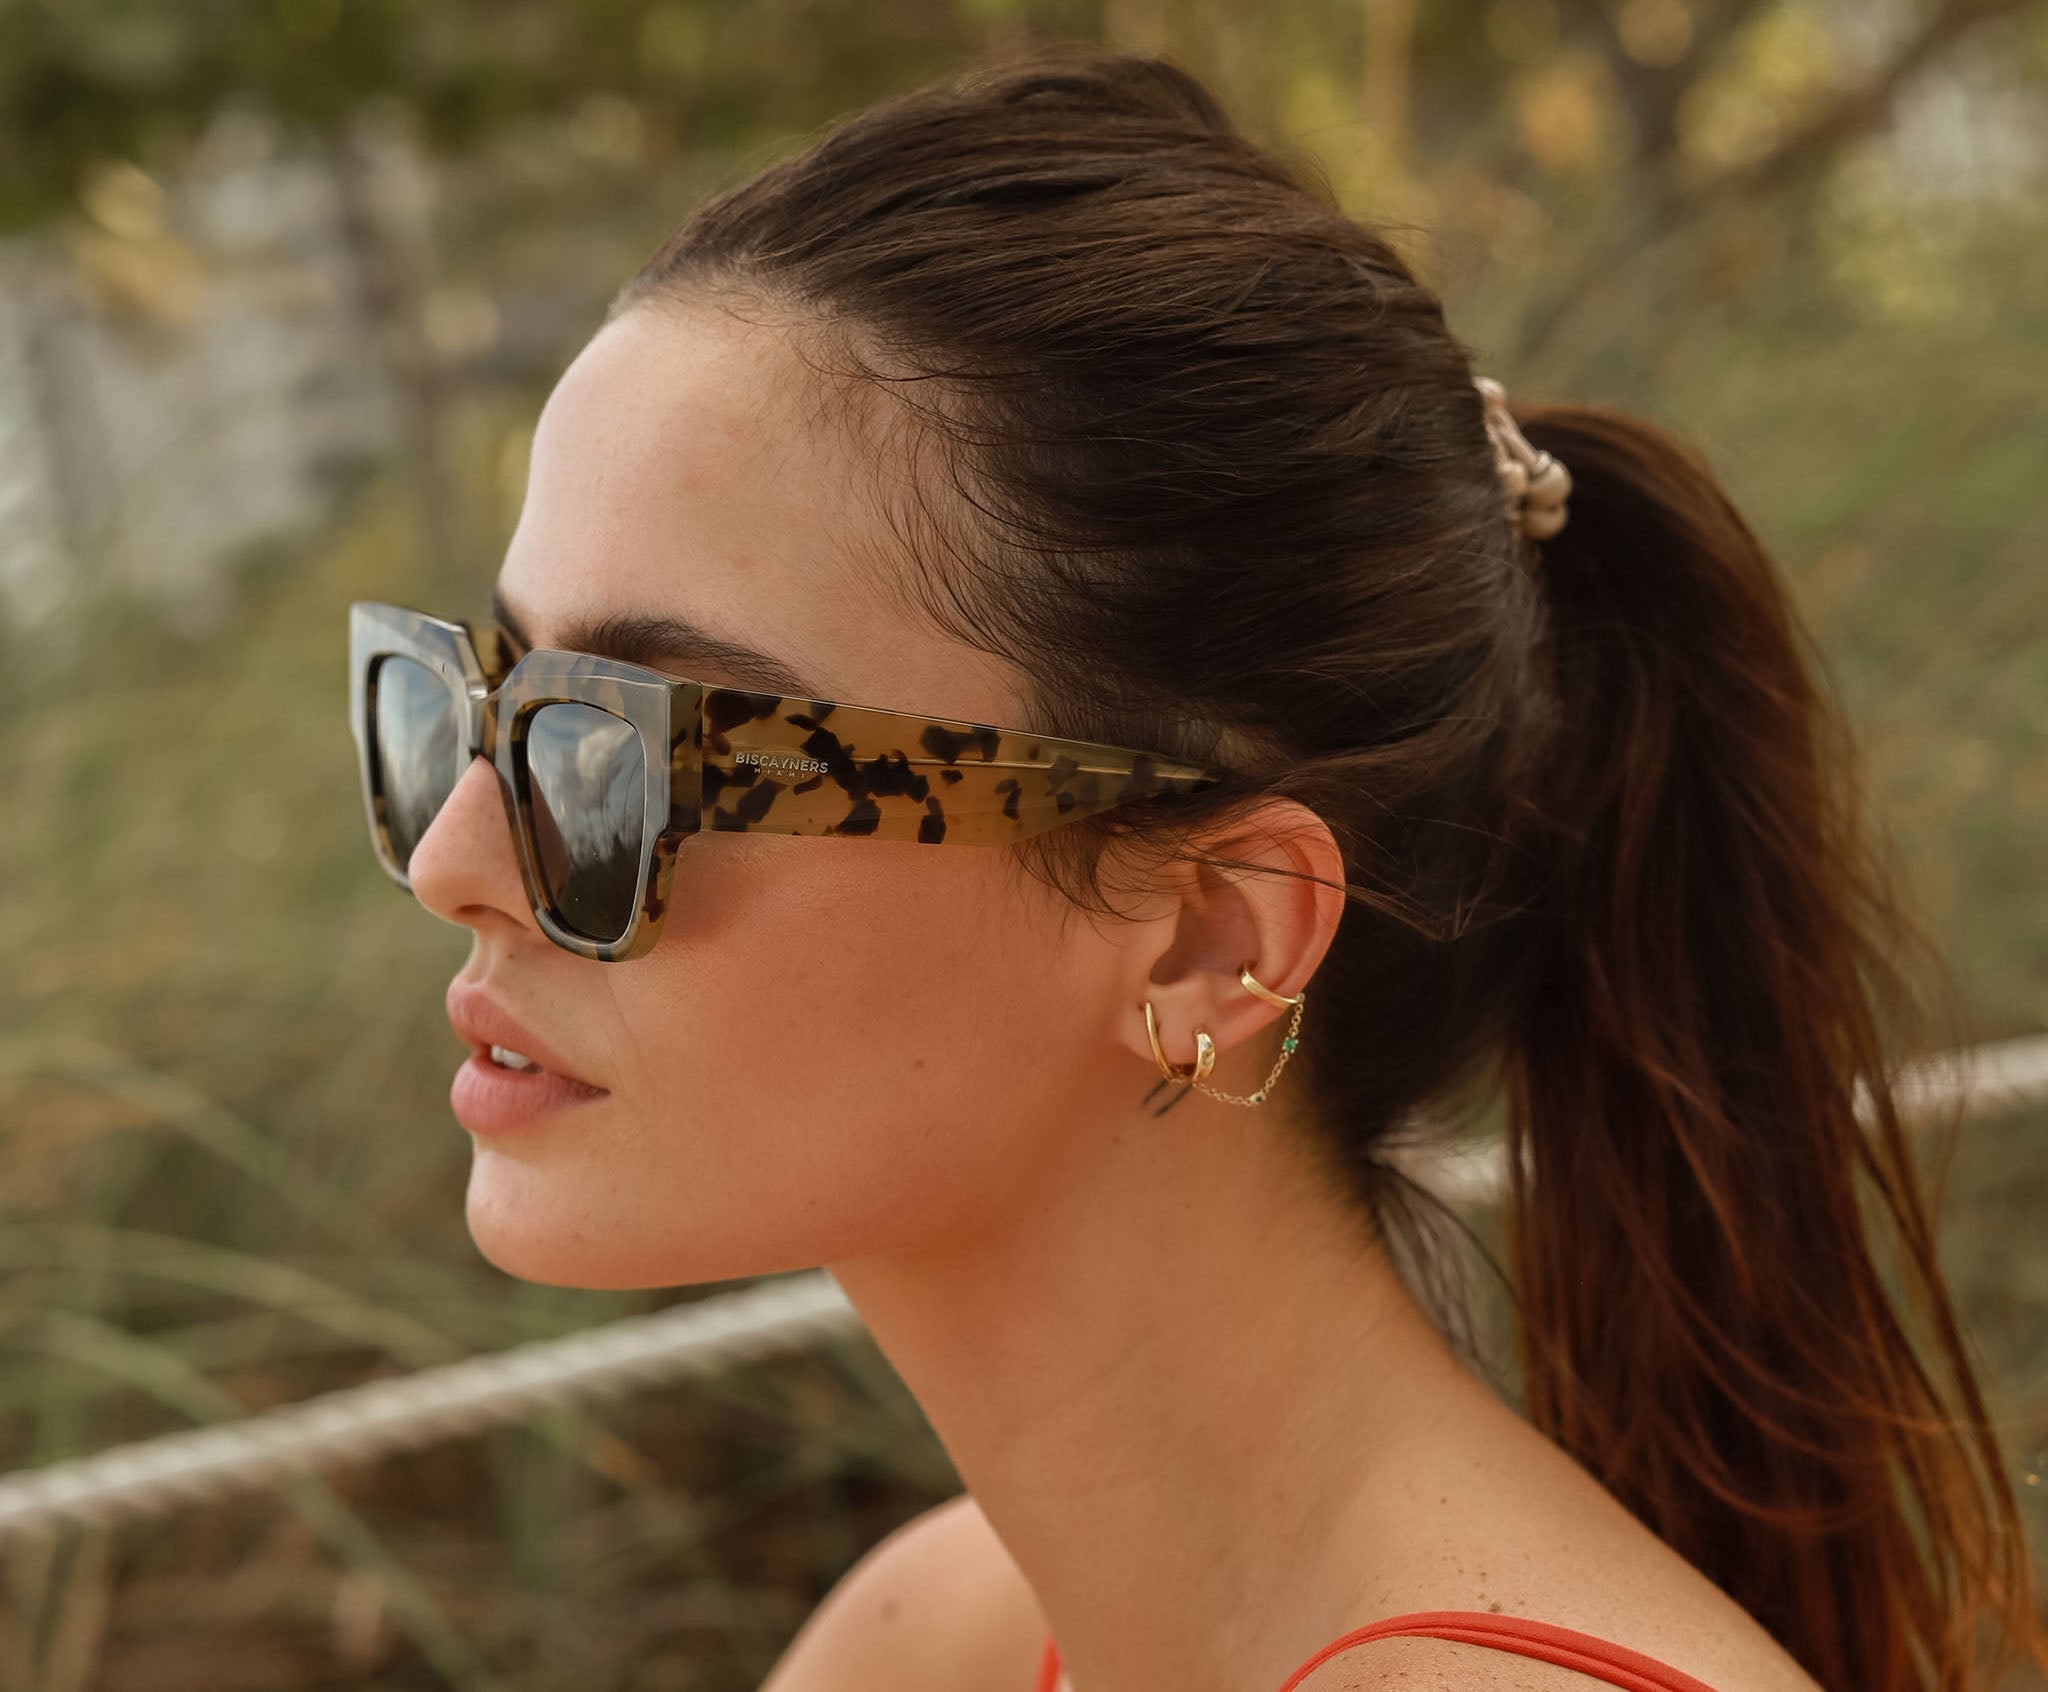 Biscayners Sunglasses |  Glenridge Demi